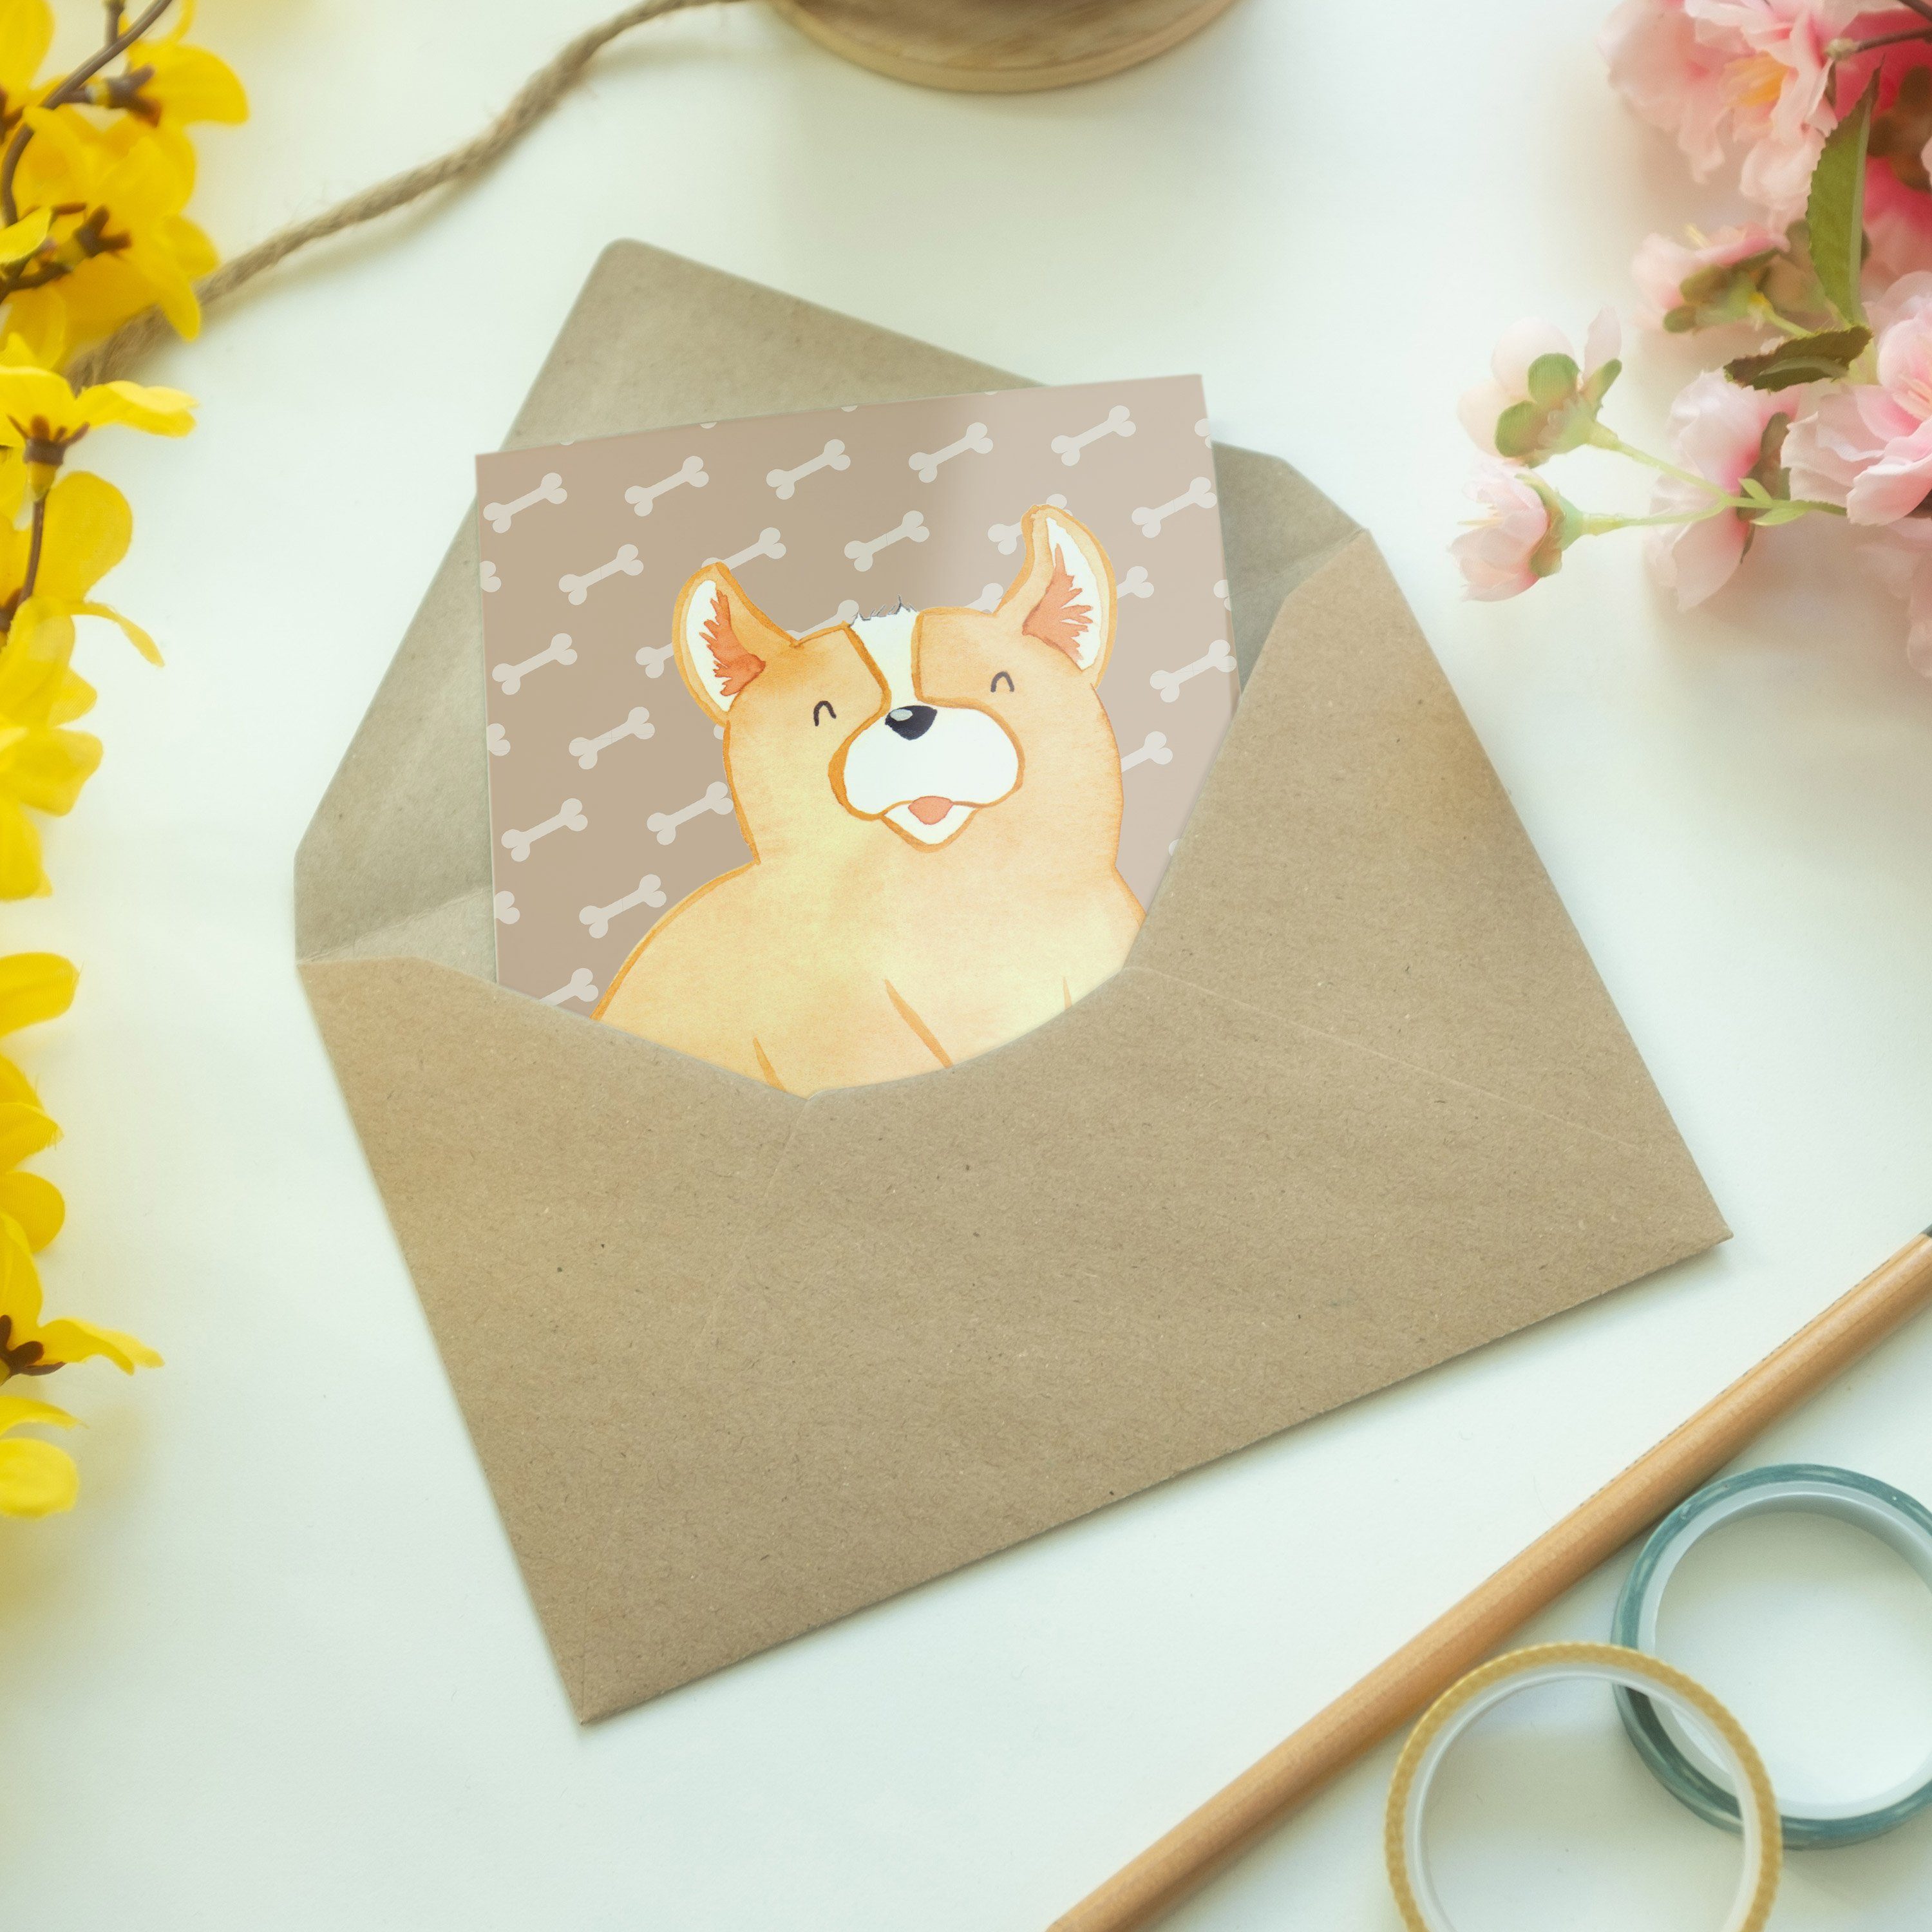 Mr. & Mrs. Panda Grußkarte - Hundeglück Corgie - Geburtstagskarte, Geschenk, Hochzeitskarte, Glü